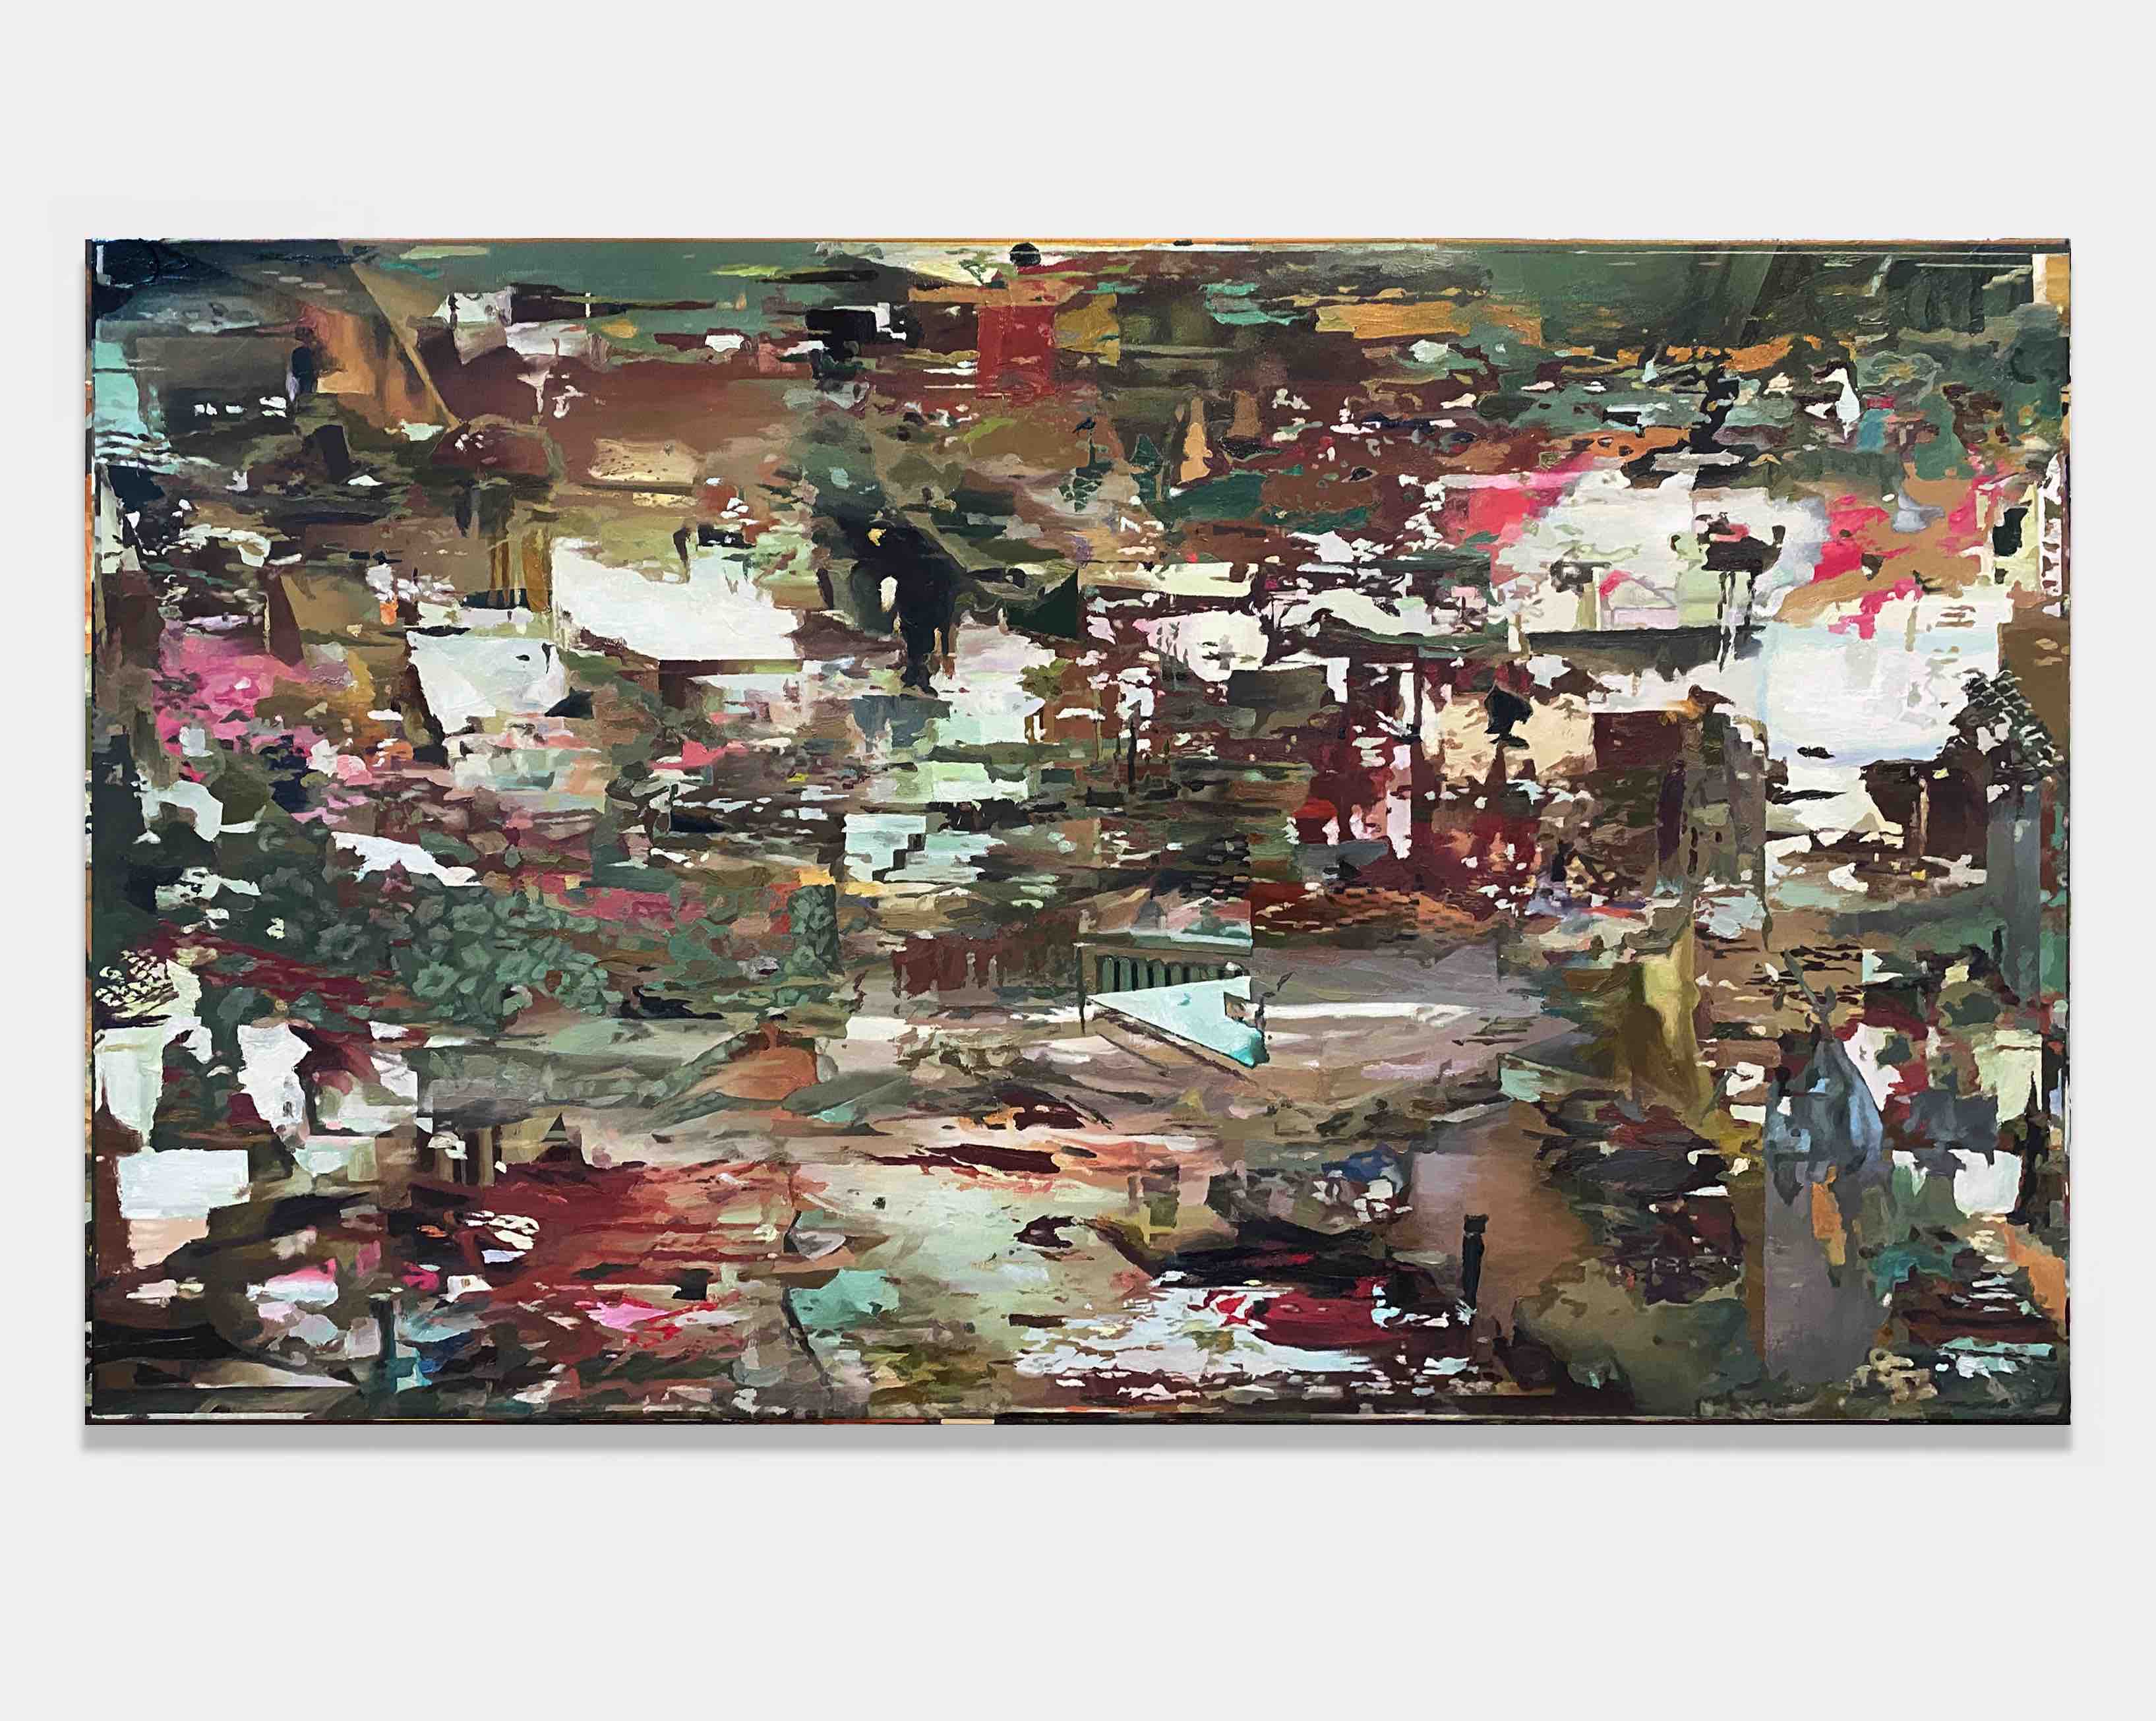 2020, oil on canvas, 80 x 134 cm